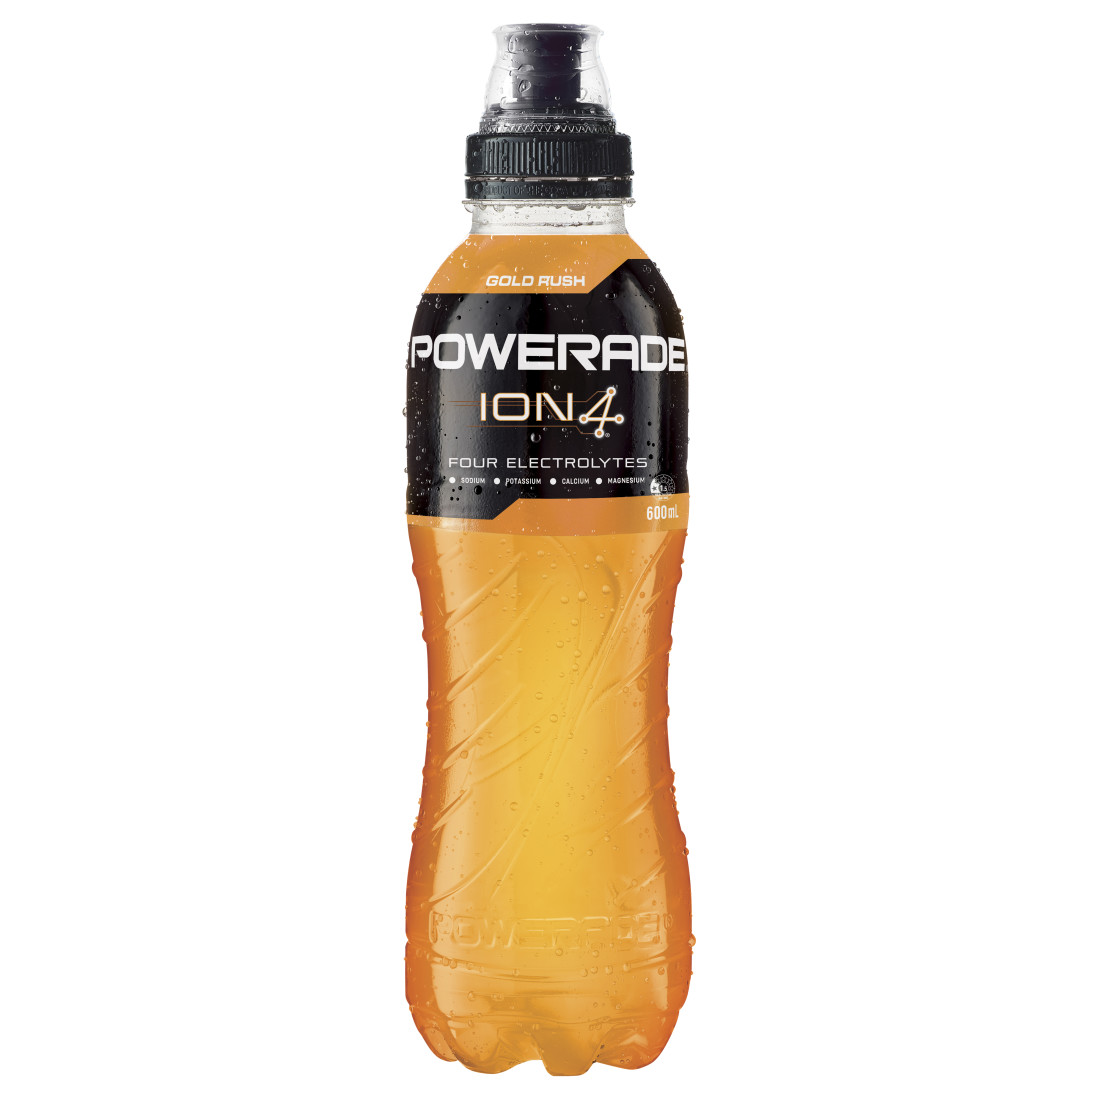 Powerade ION4 Gold Rush bottle